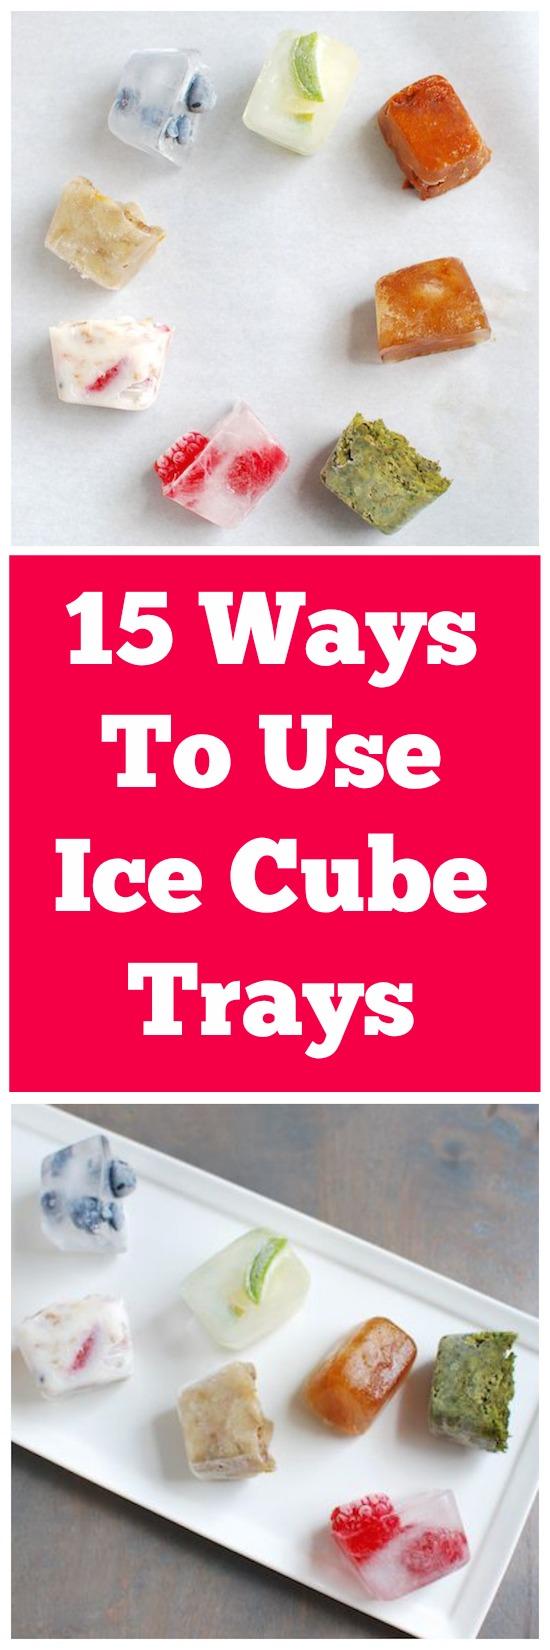 9 New Ways to Use Ice Cube Trays